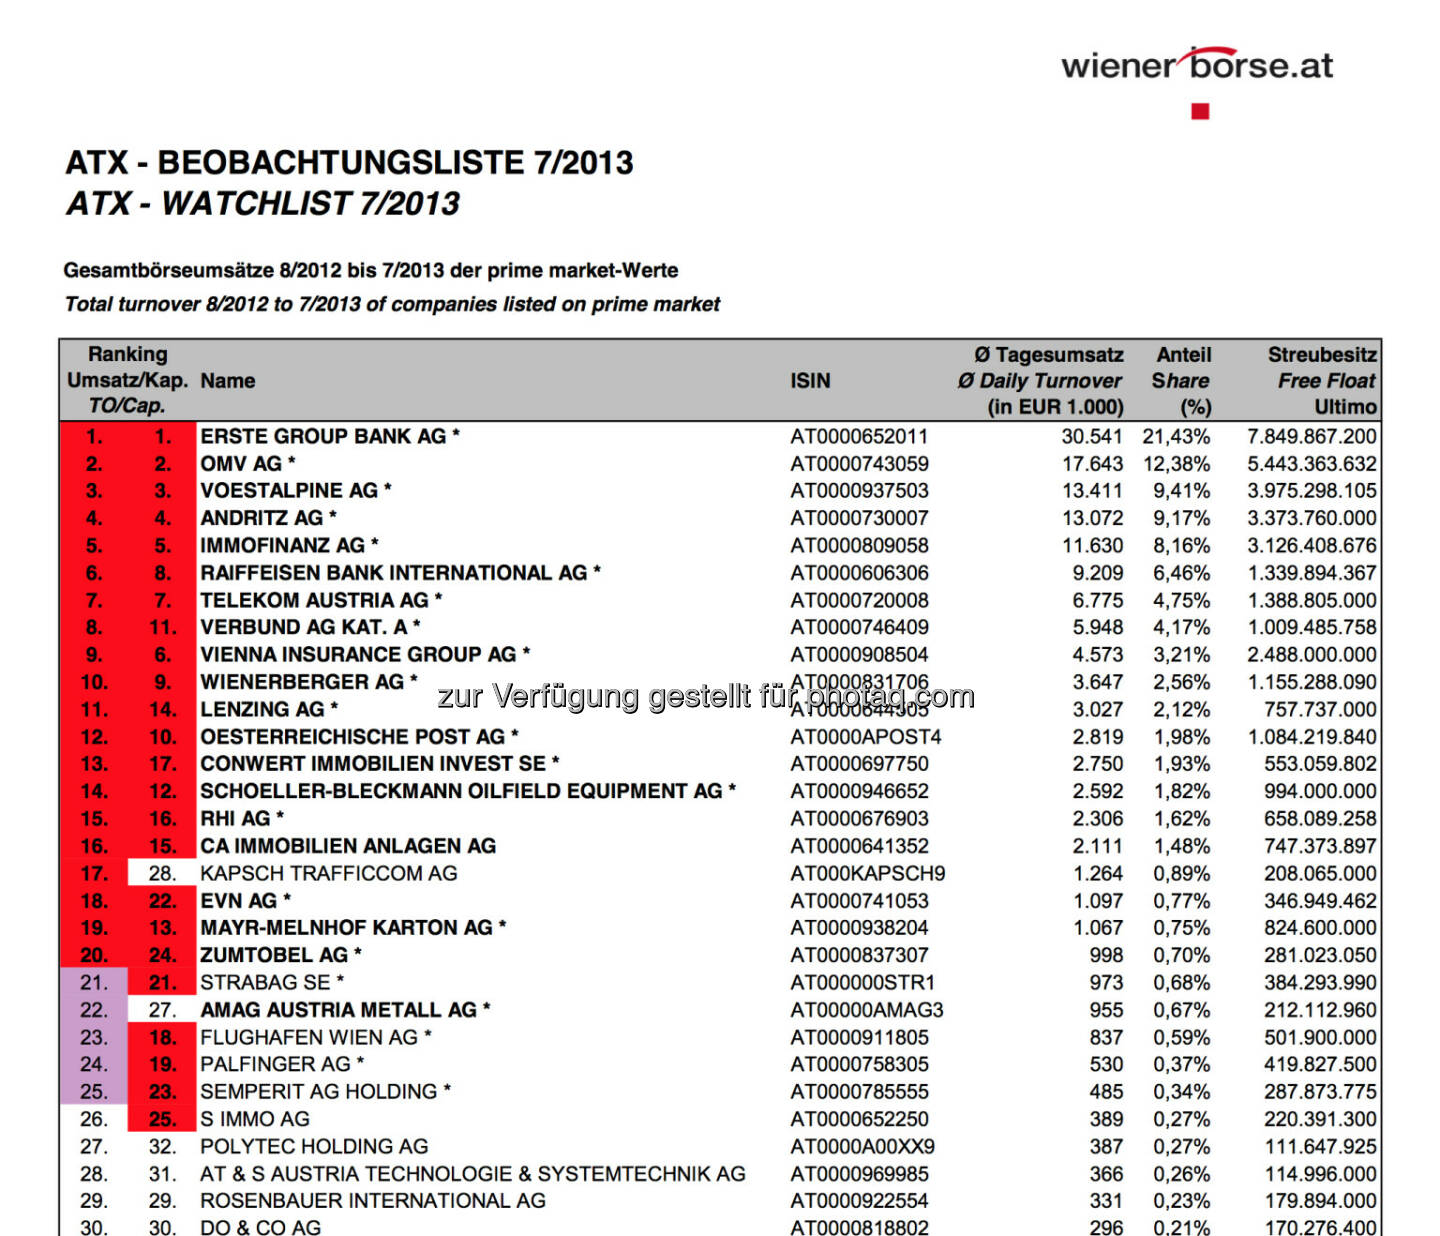 ATX-Beobachtungsliste 7/2013 (c) Wiener Börse